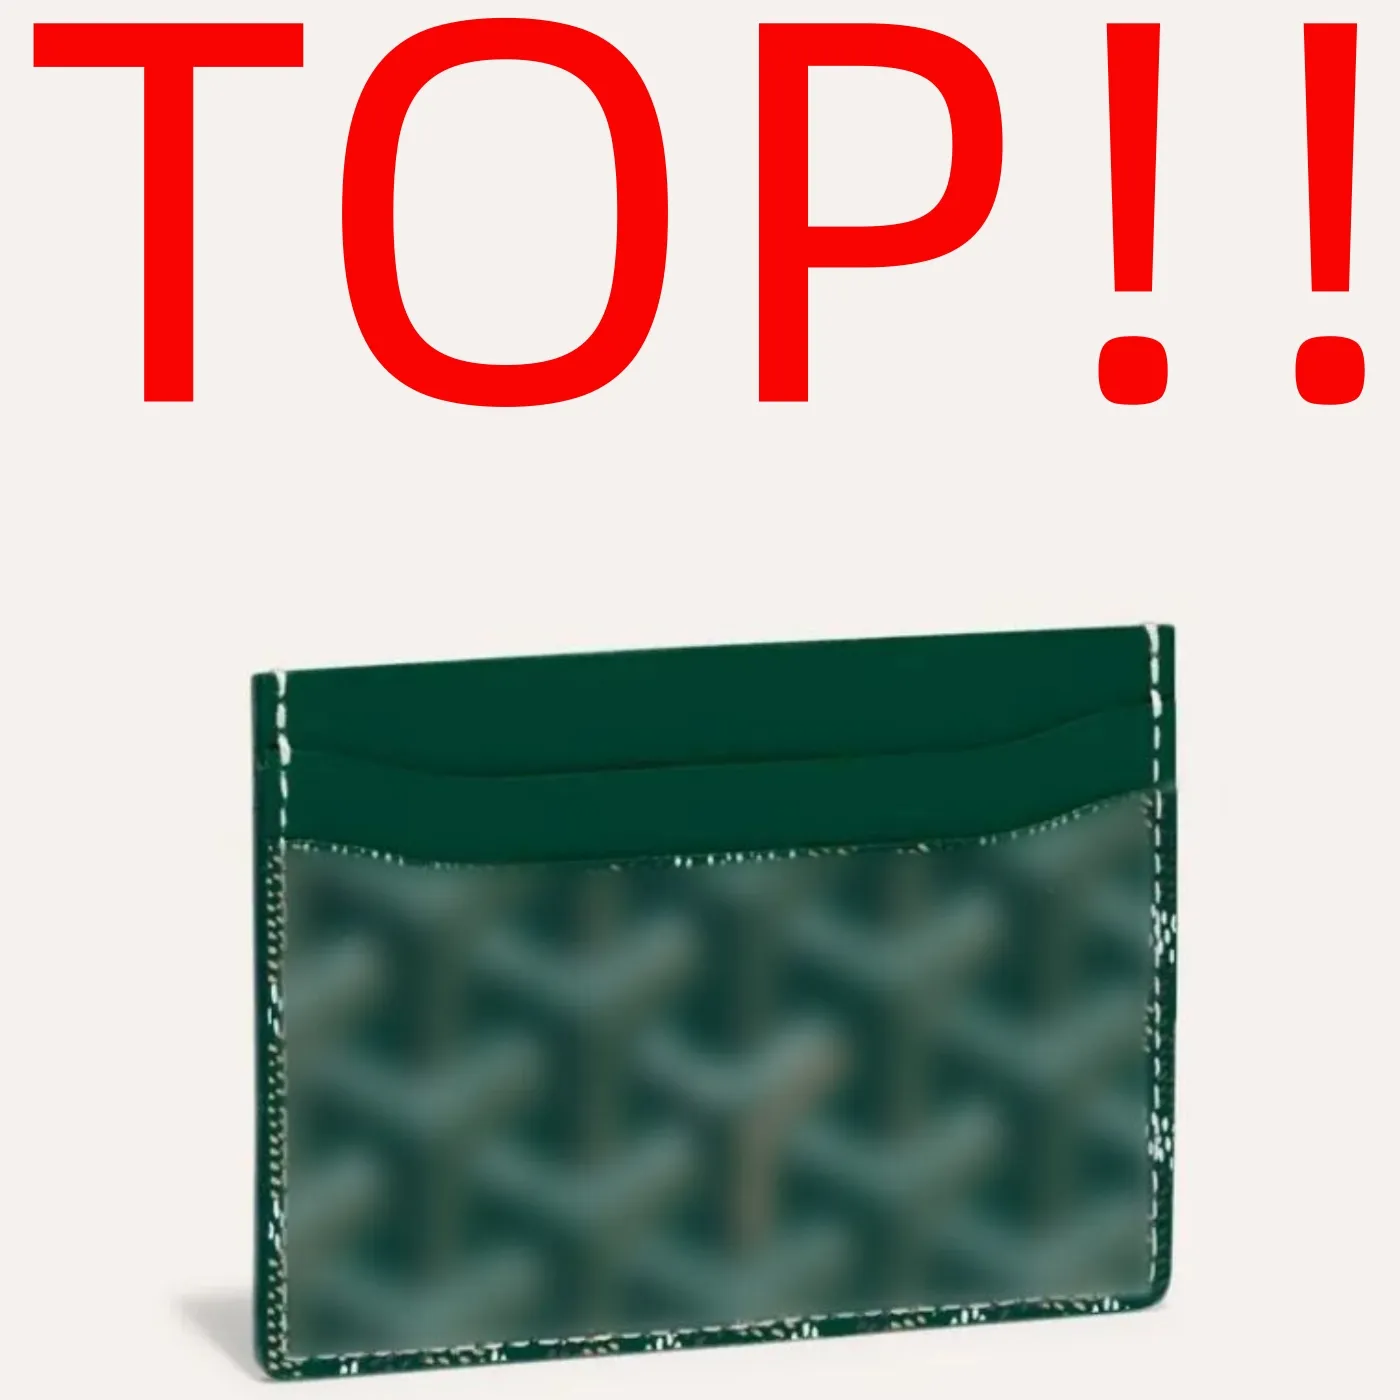 TOP. GREEN. CARD HOLDER WALLET Pocket Organizer Women Men Designer Wallet Case Purse